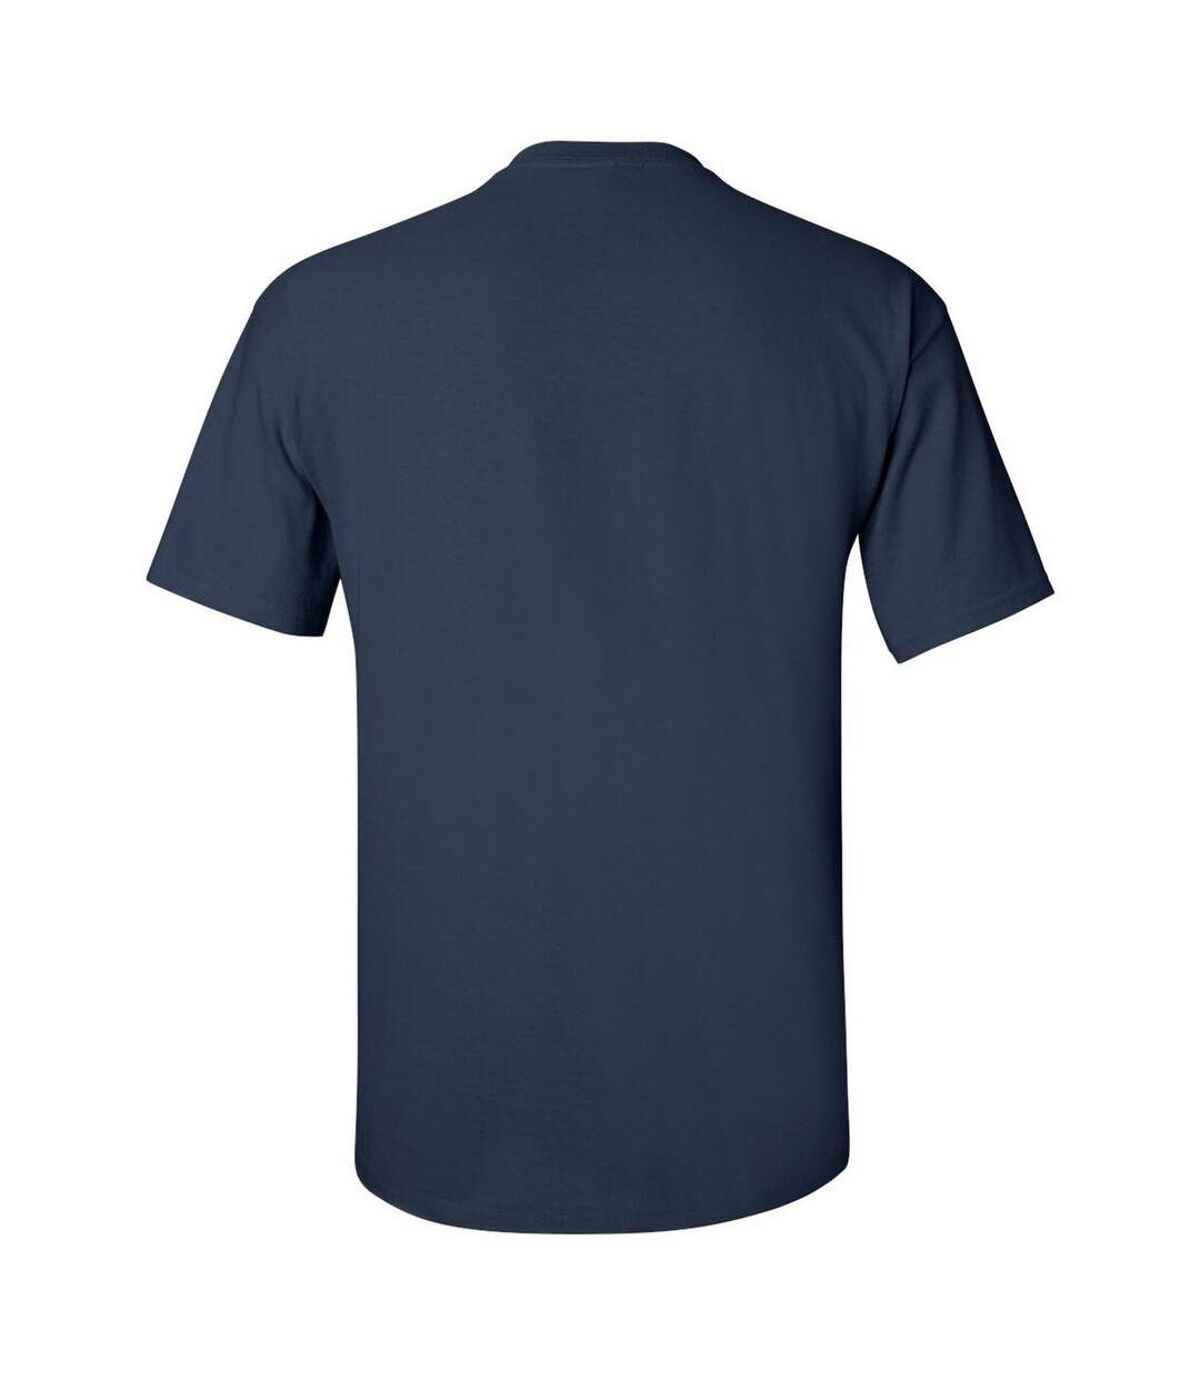 Gildan - T-shirt à manches courtes - Homme (Bleu marine) - UTBC475